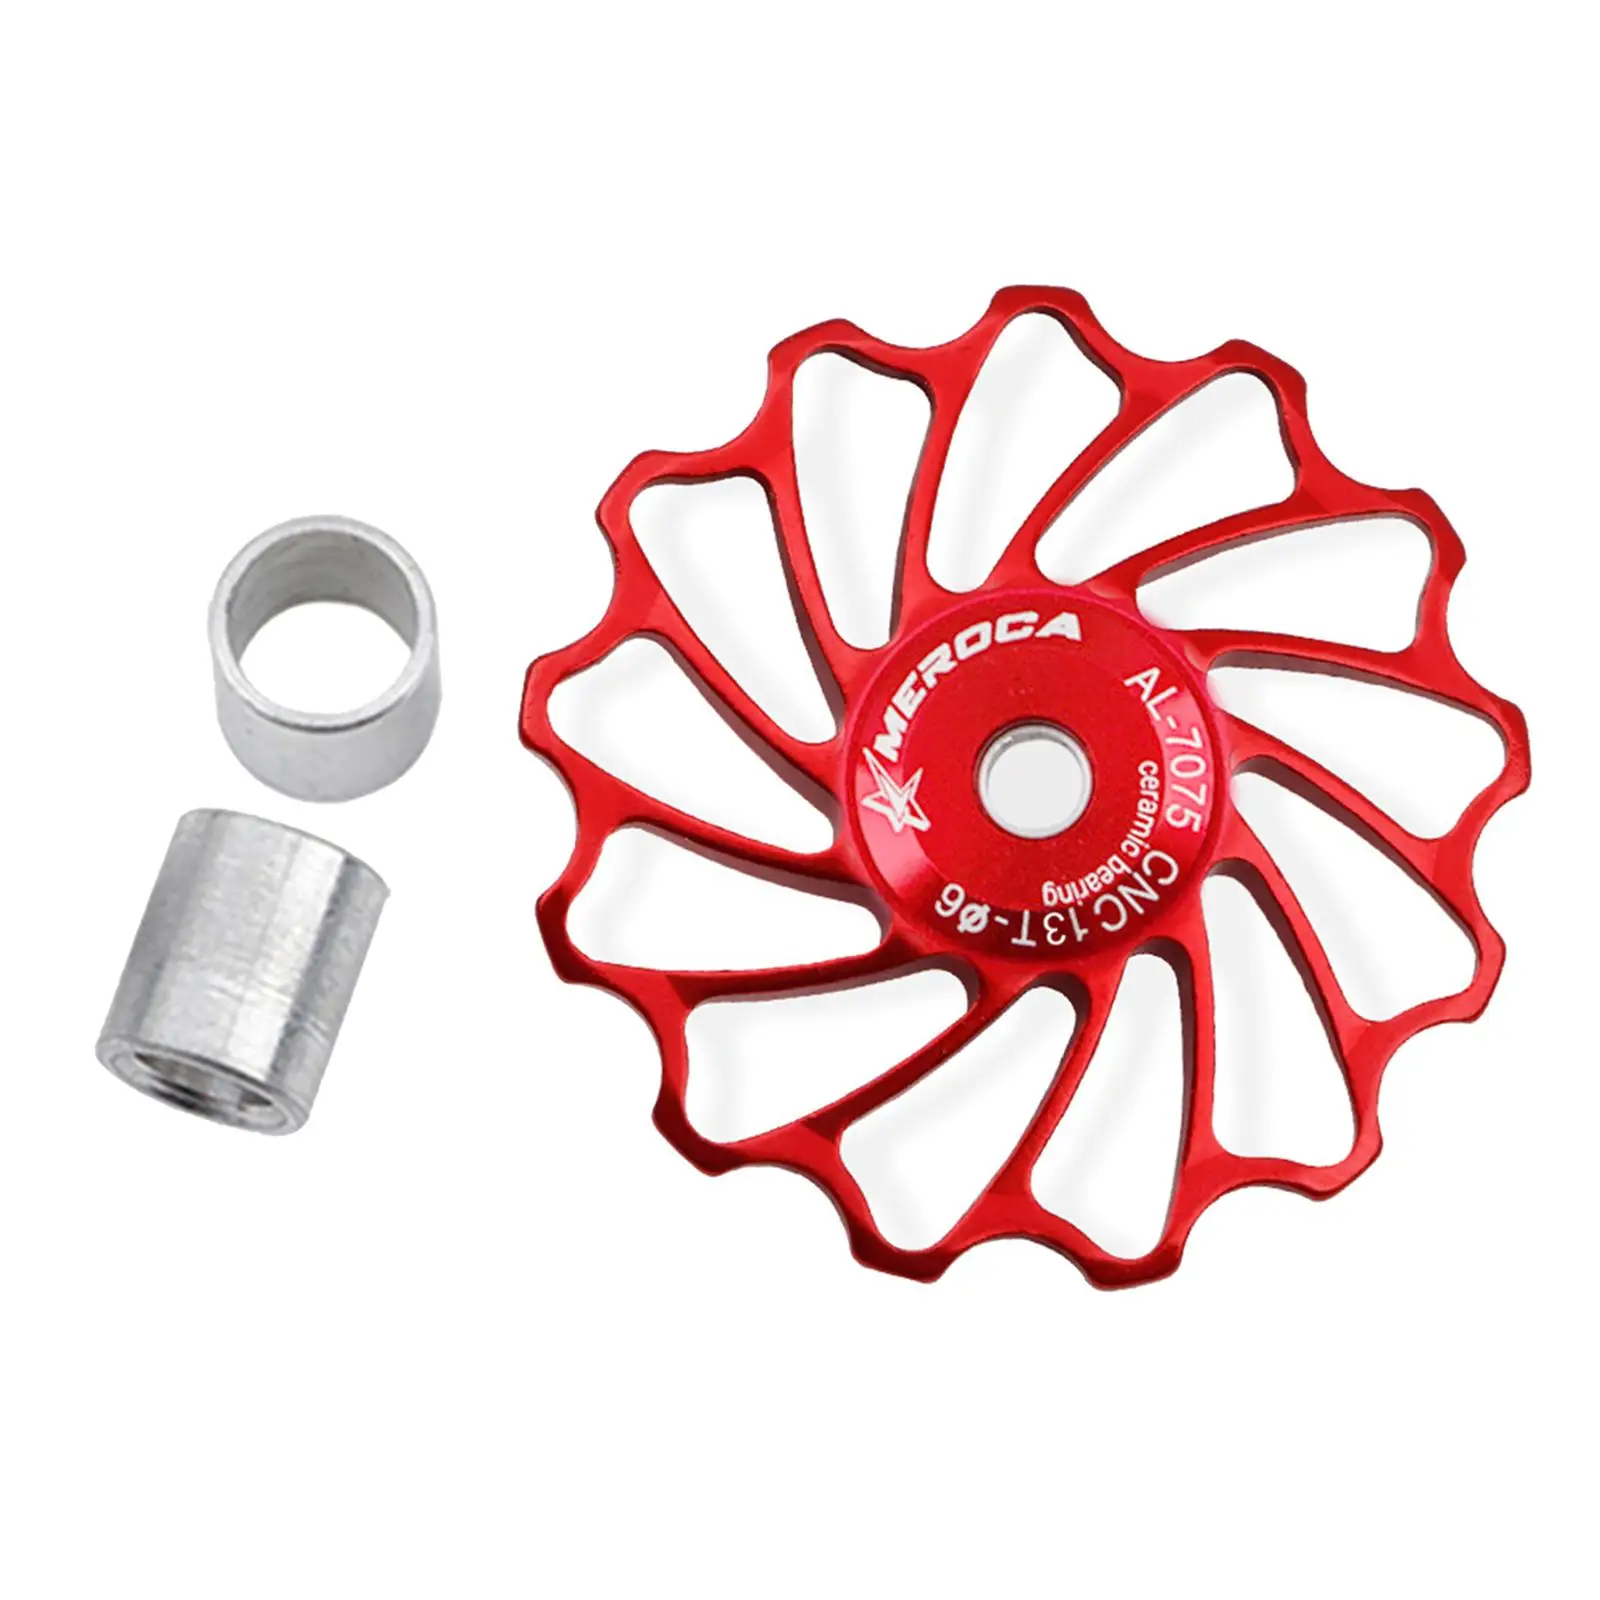 11/13T Bearing Jockey Wheel Wide Range of Use Durable Ceramic for Bicycle